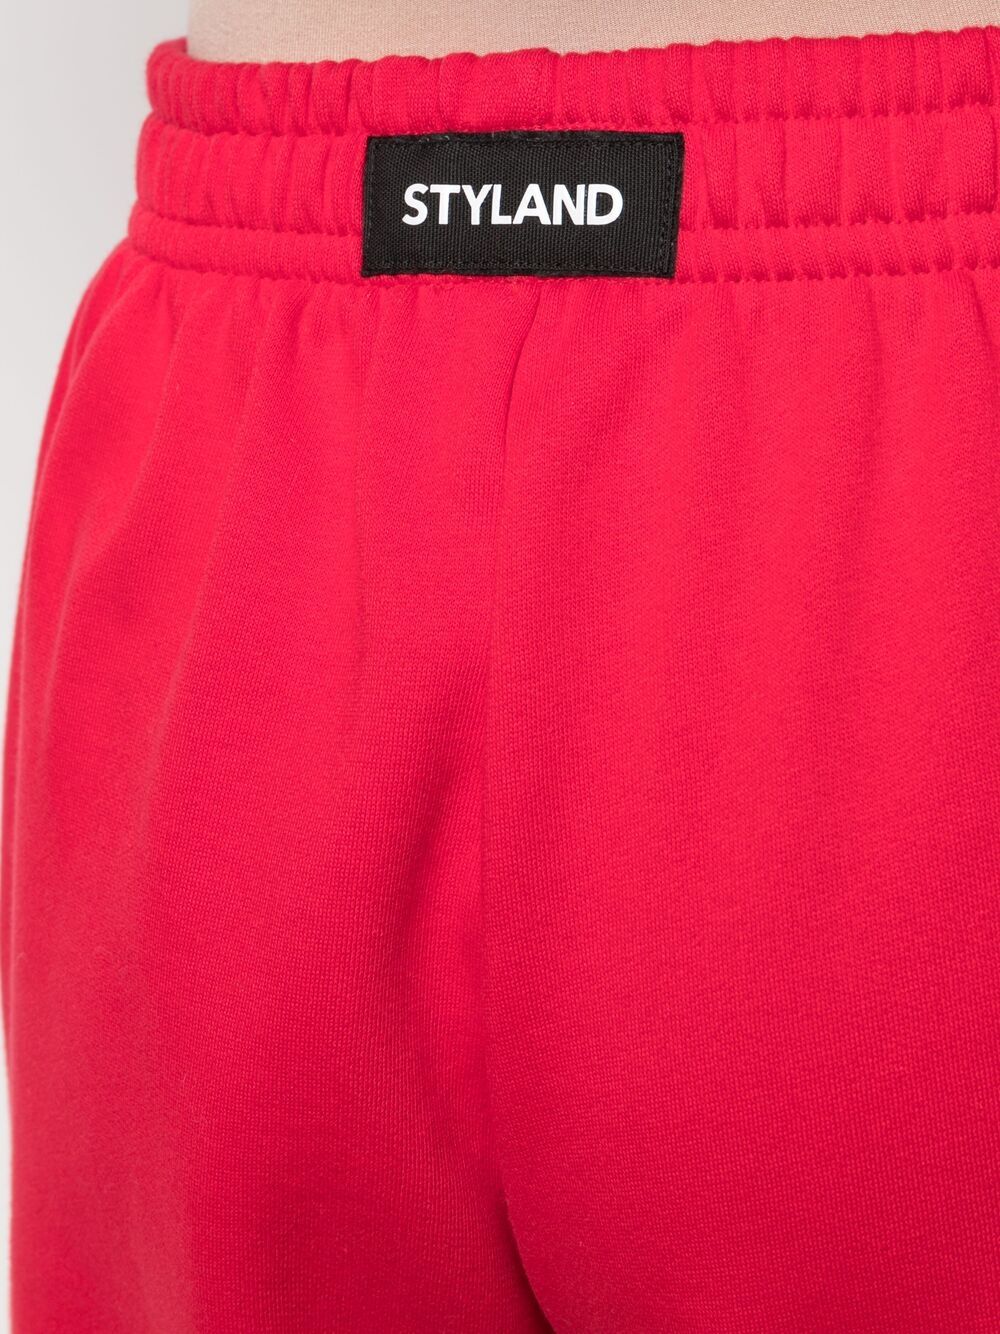 фото Styland спортивные брюки широкого кроя